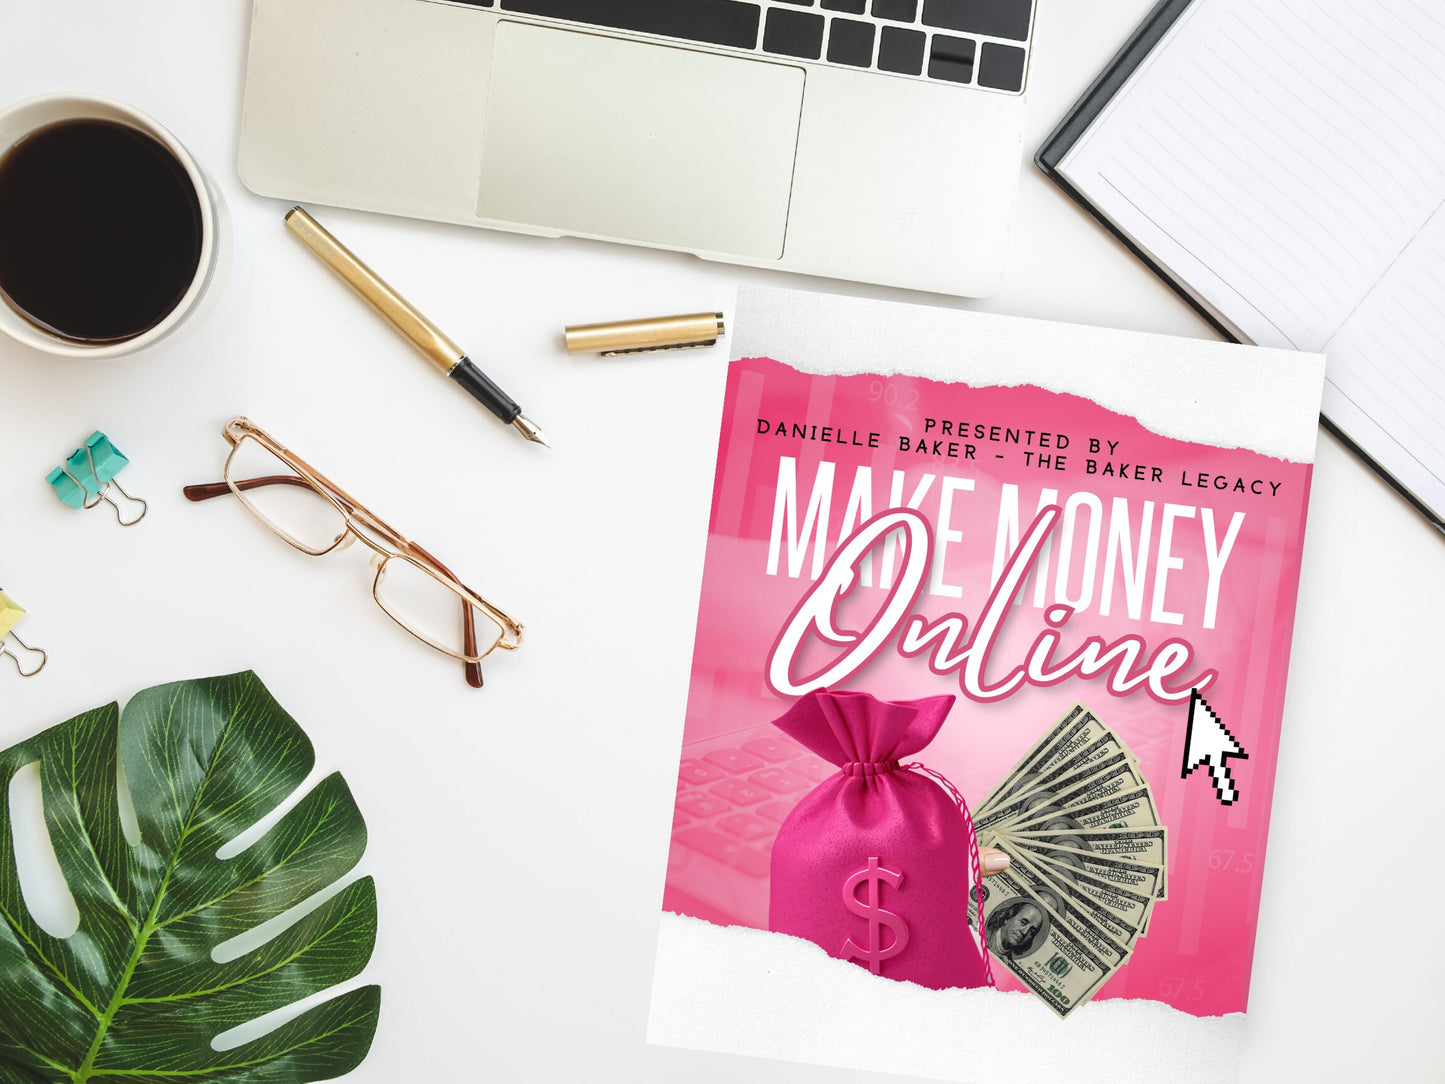 Make Money Online E Book, Making Money, How to Start a Business